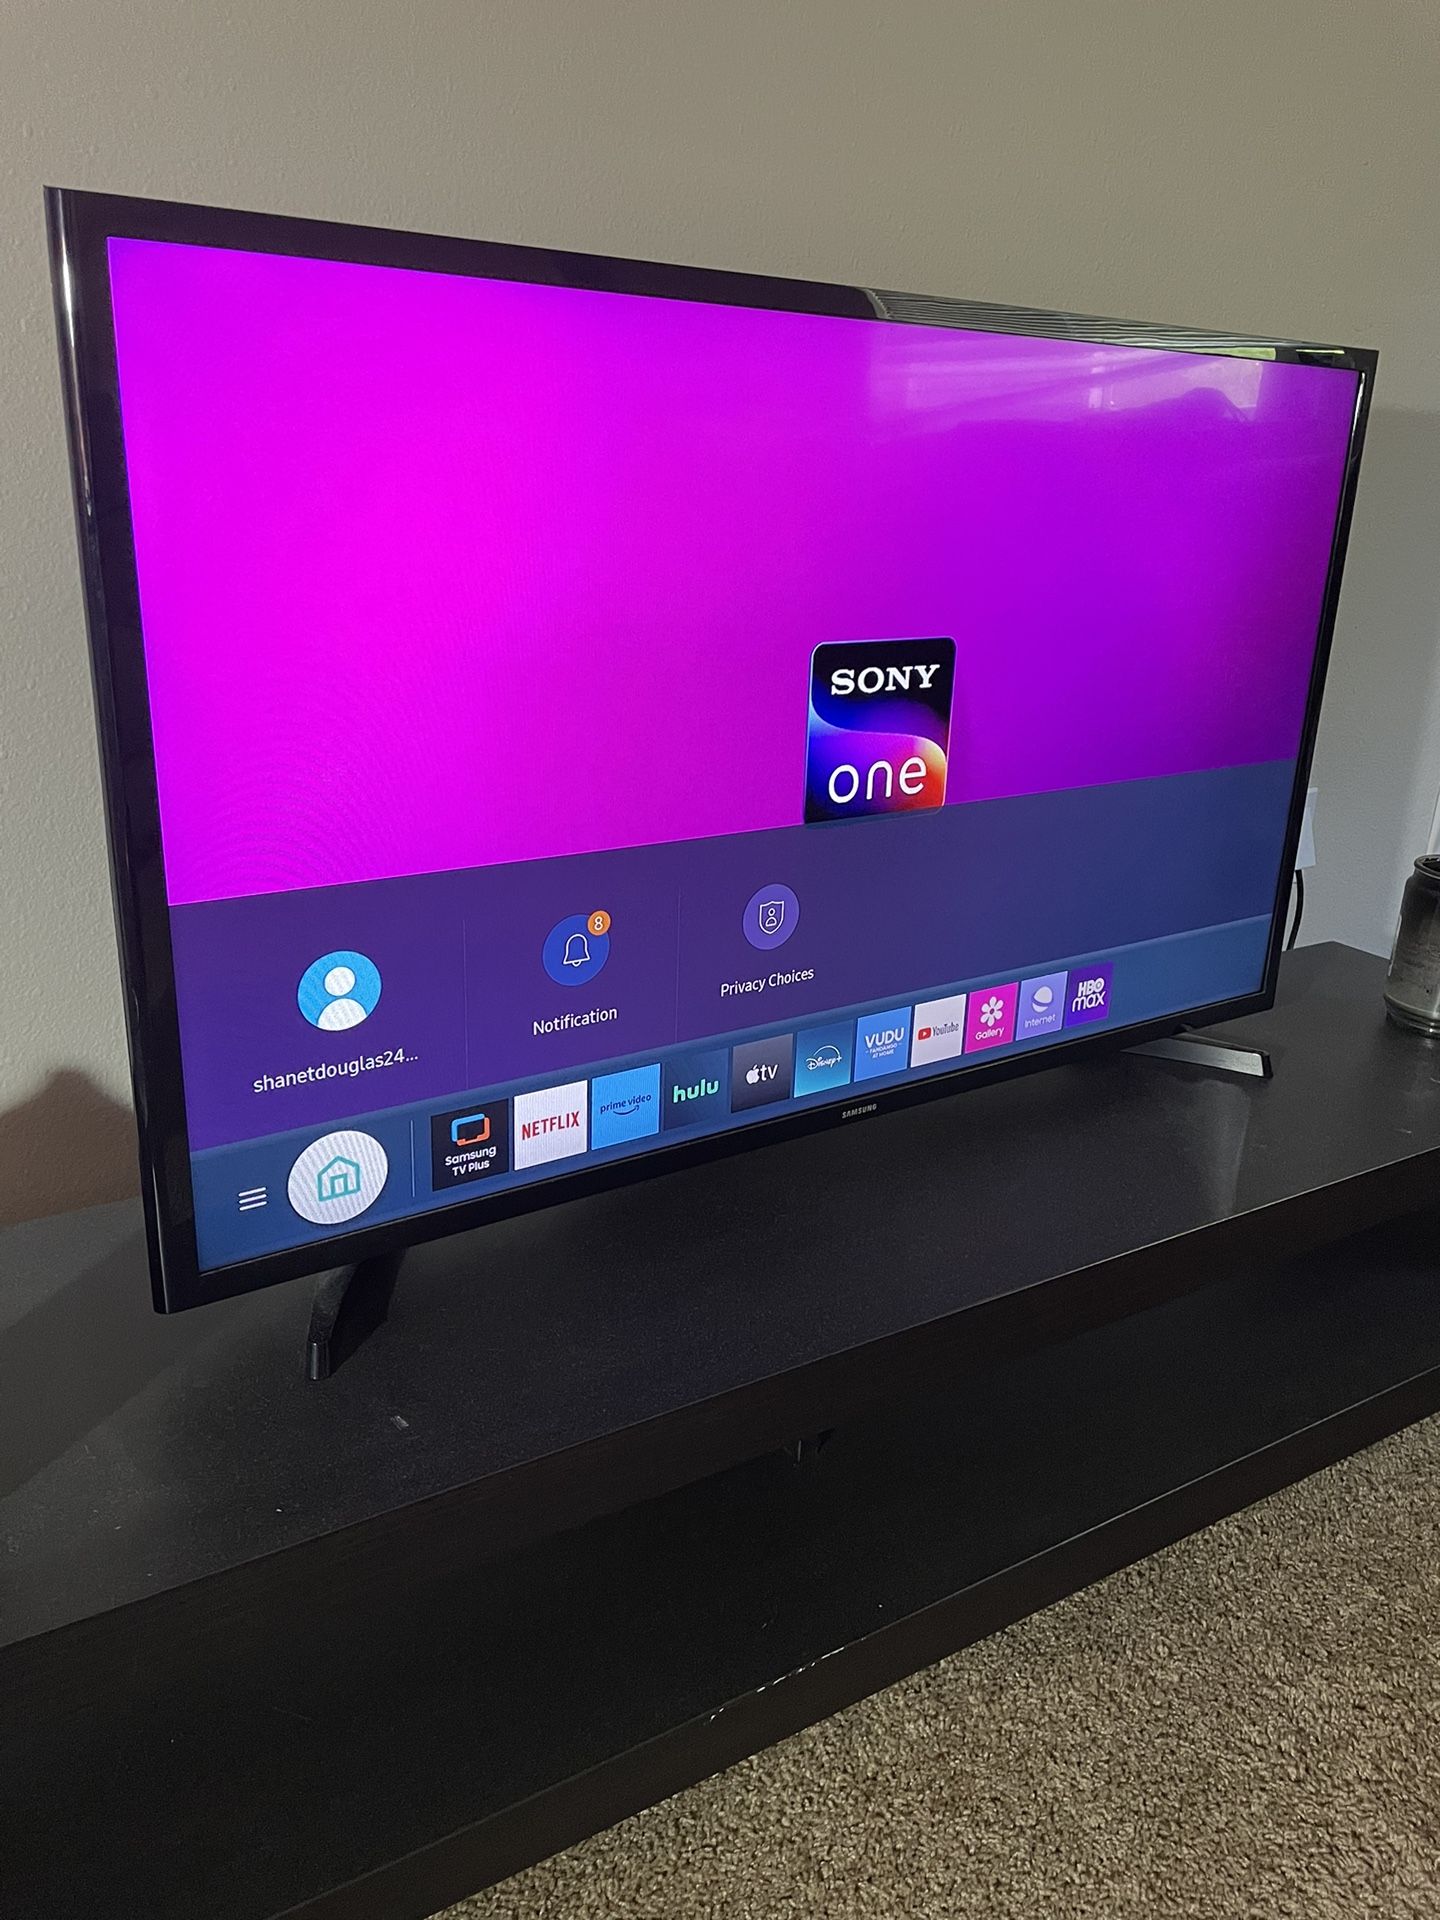 40 Inch SAMSUNG Smart TV Brand New 